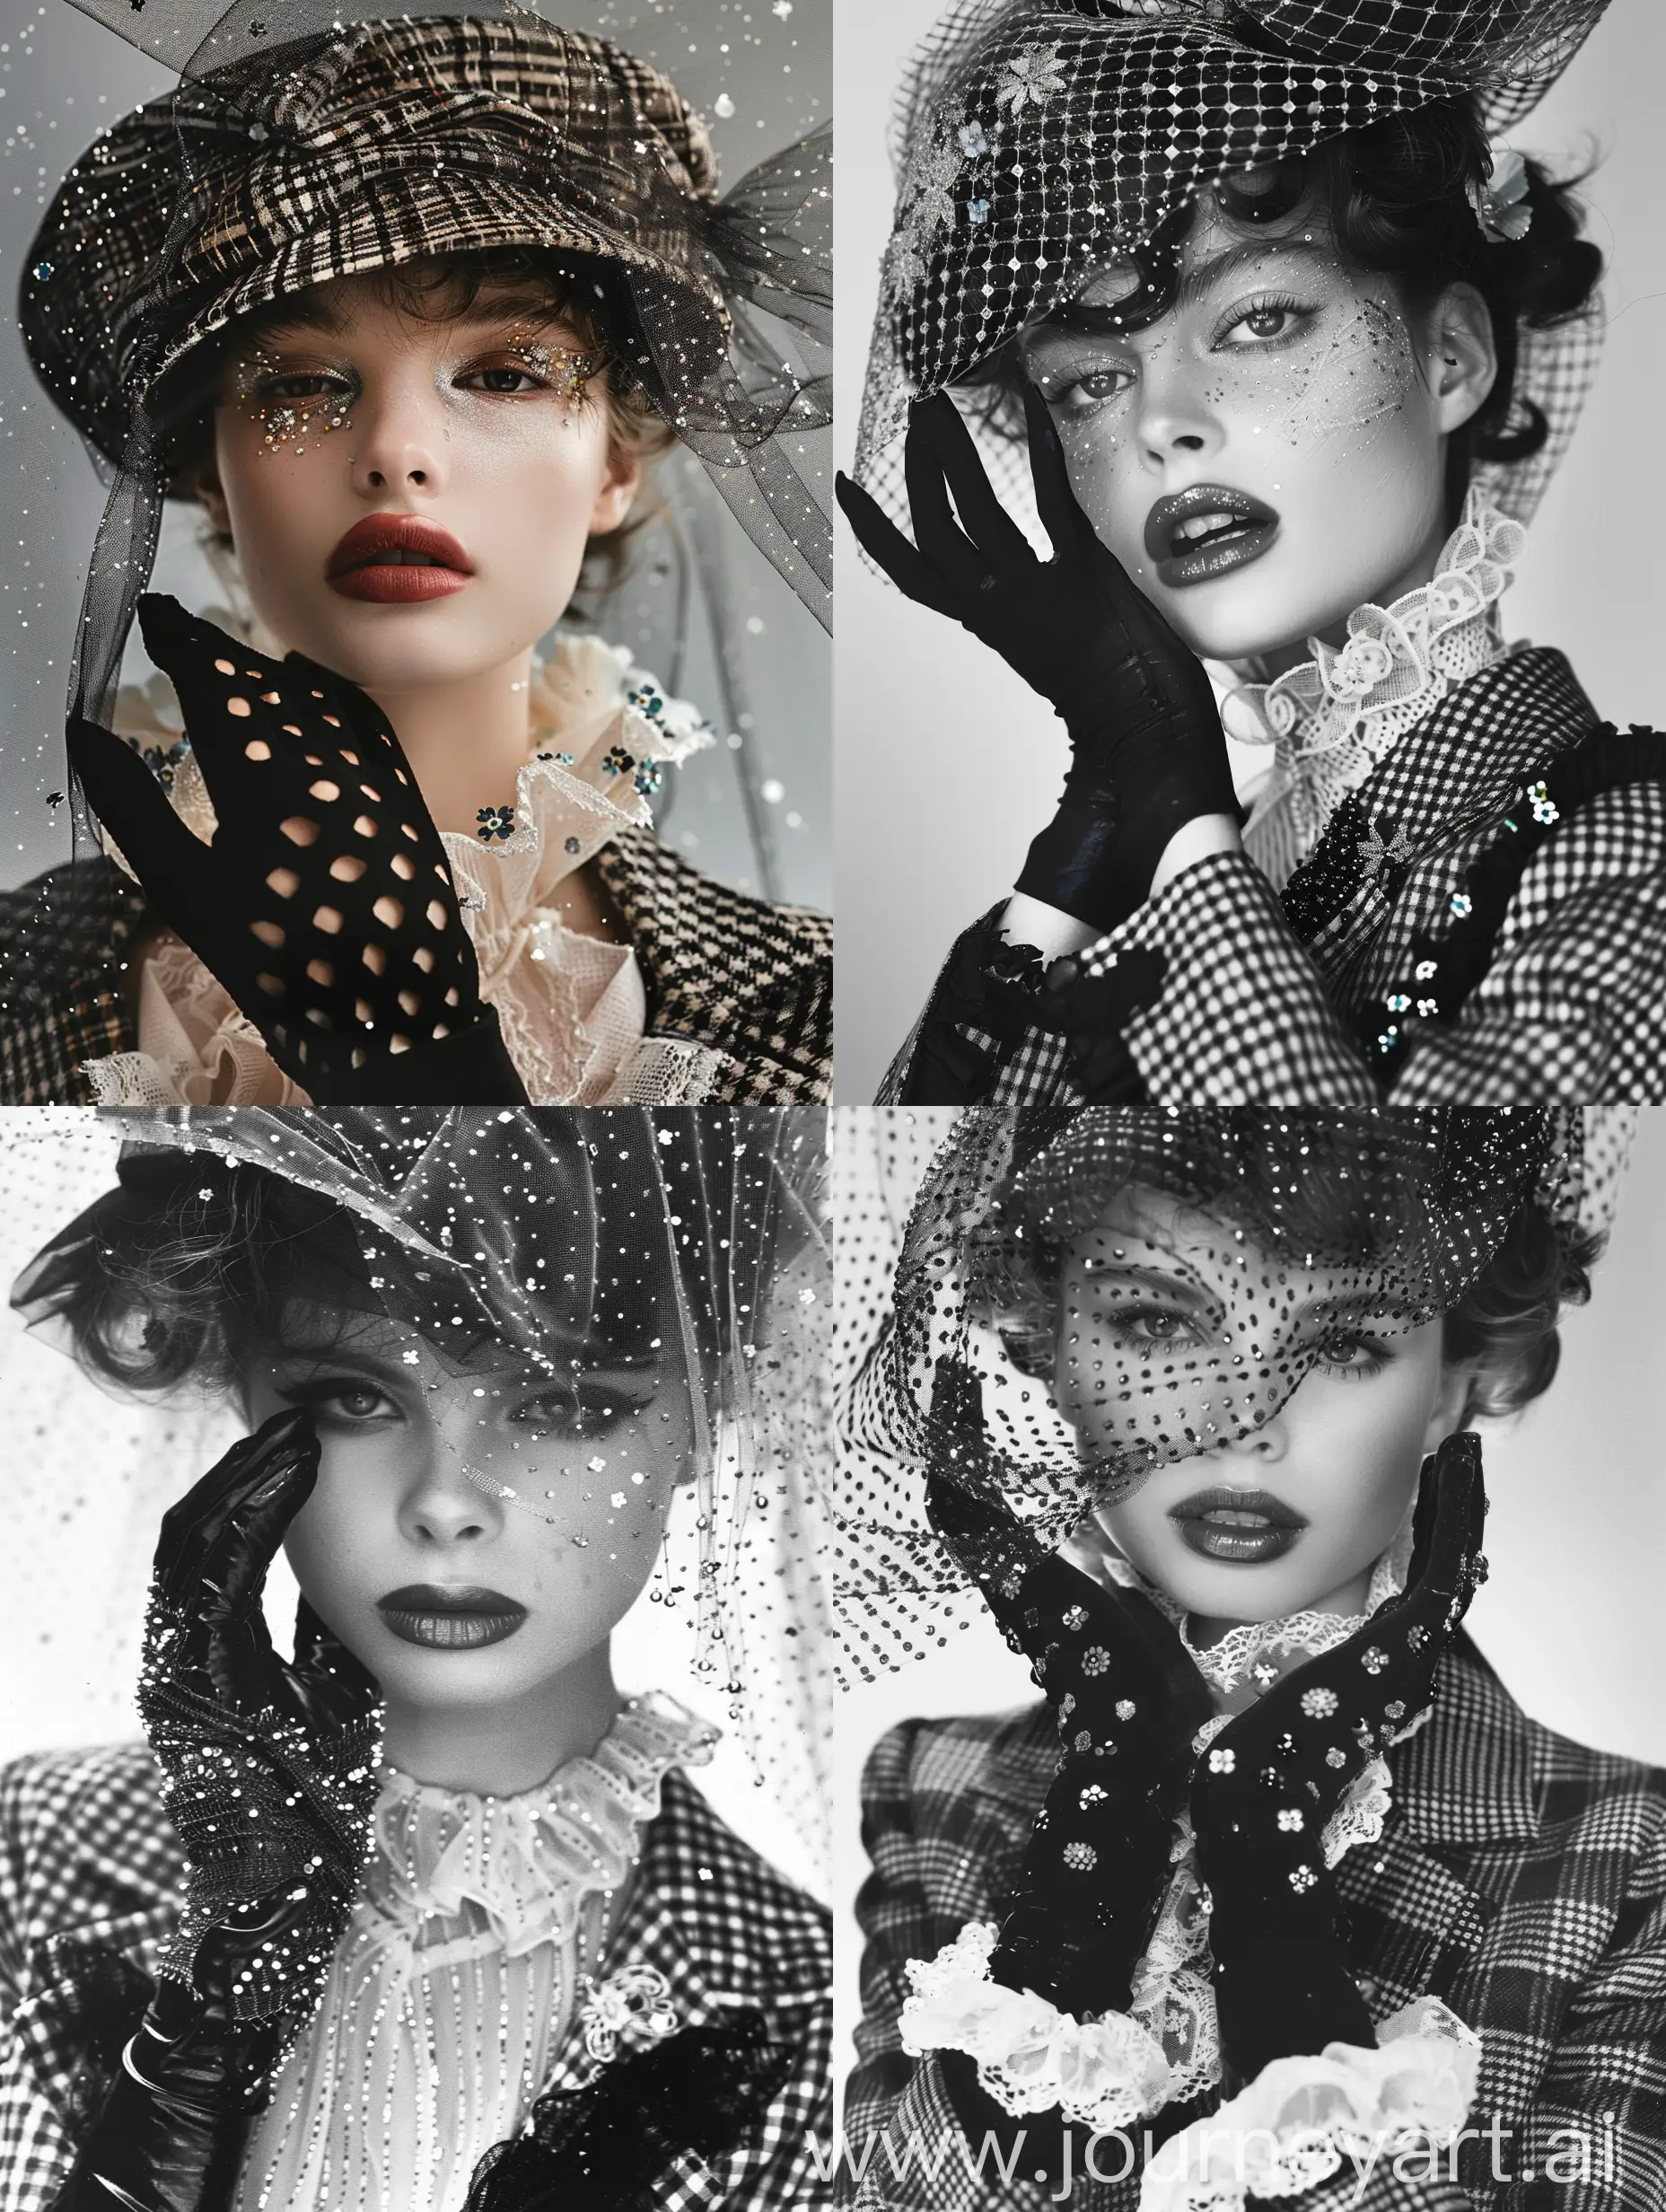 Princess-Snow-White-Marilyn-Monroe-90s-Aesthetic-Vogue-Photoshoot